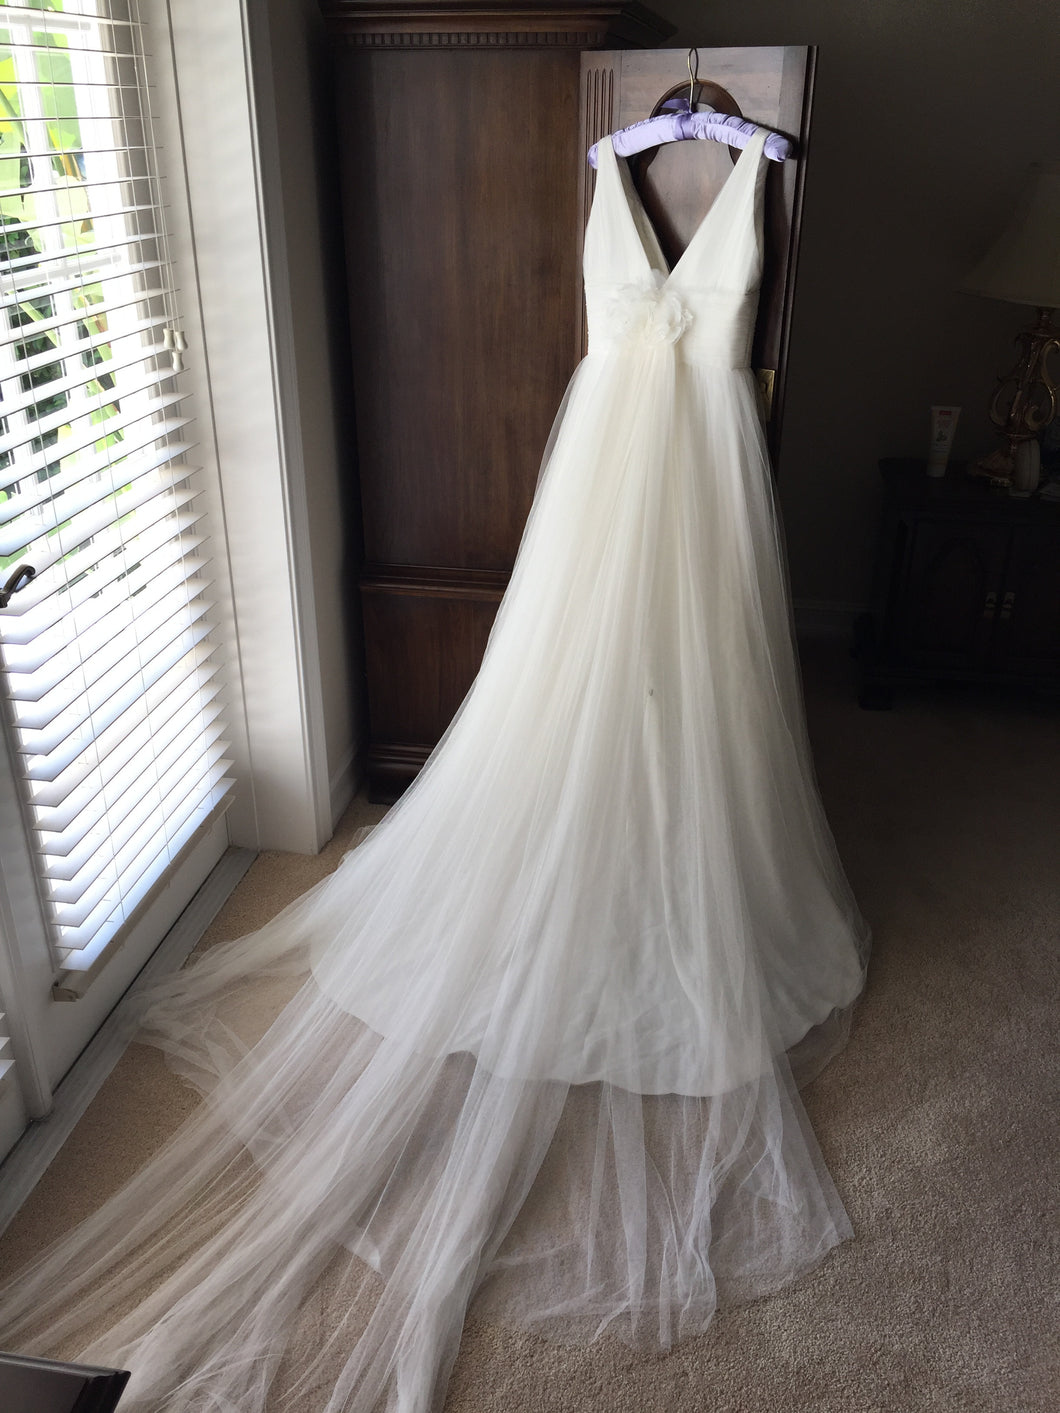 Augusta Jones 'Isala' size 4 new wedding dress front view on hanger